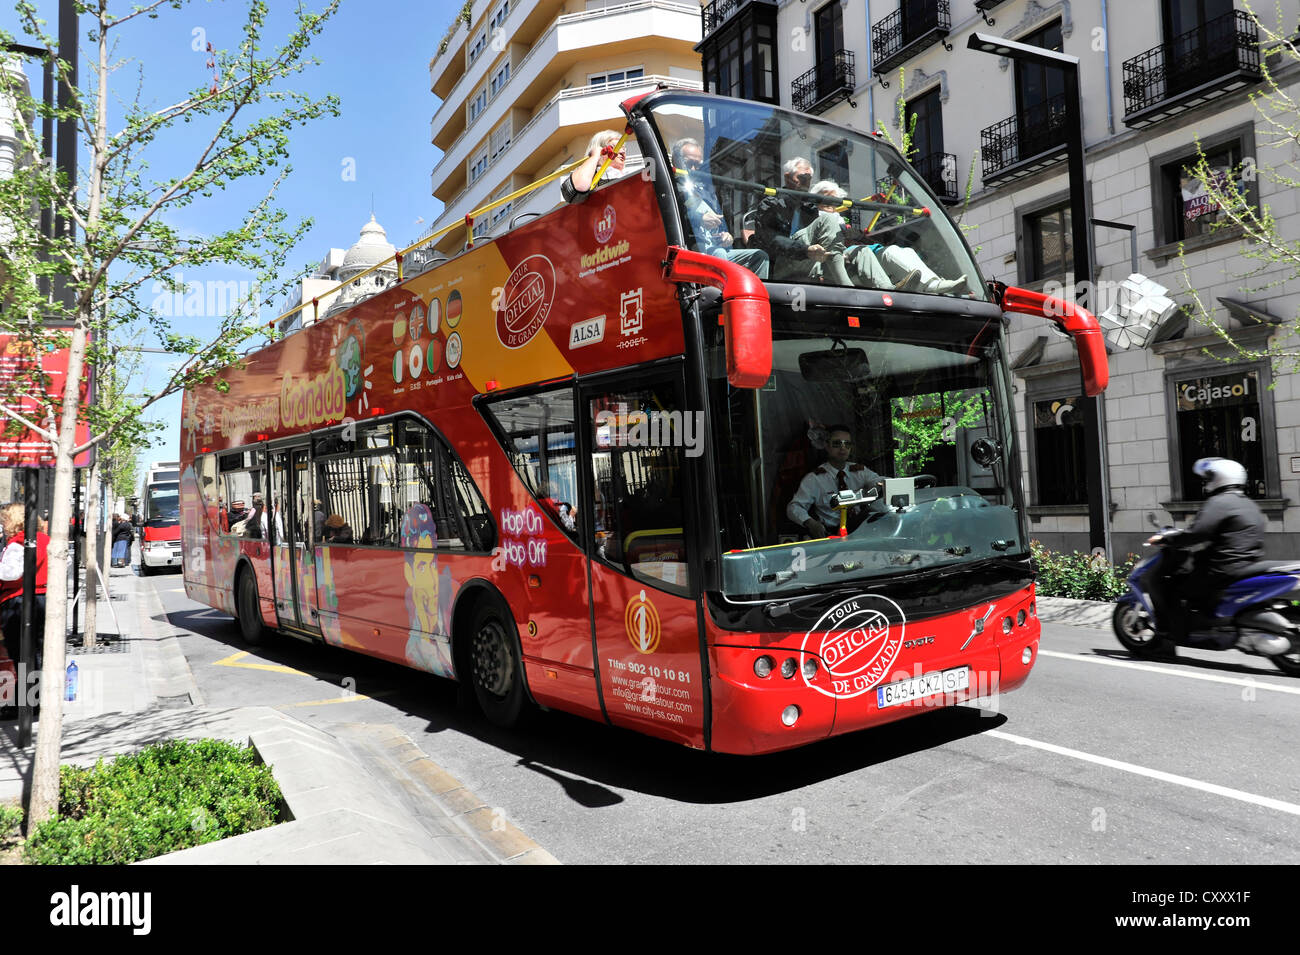 City sightseeing, city bus tour, Granada, Andalucia, Spain, Europe Stock Photo